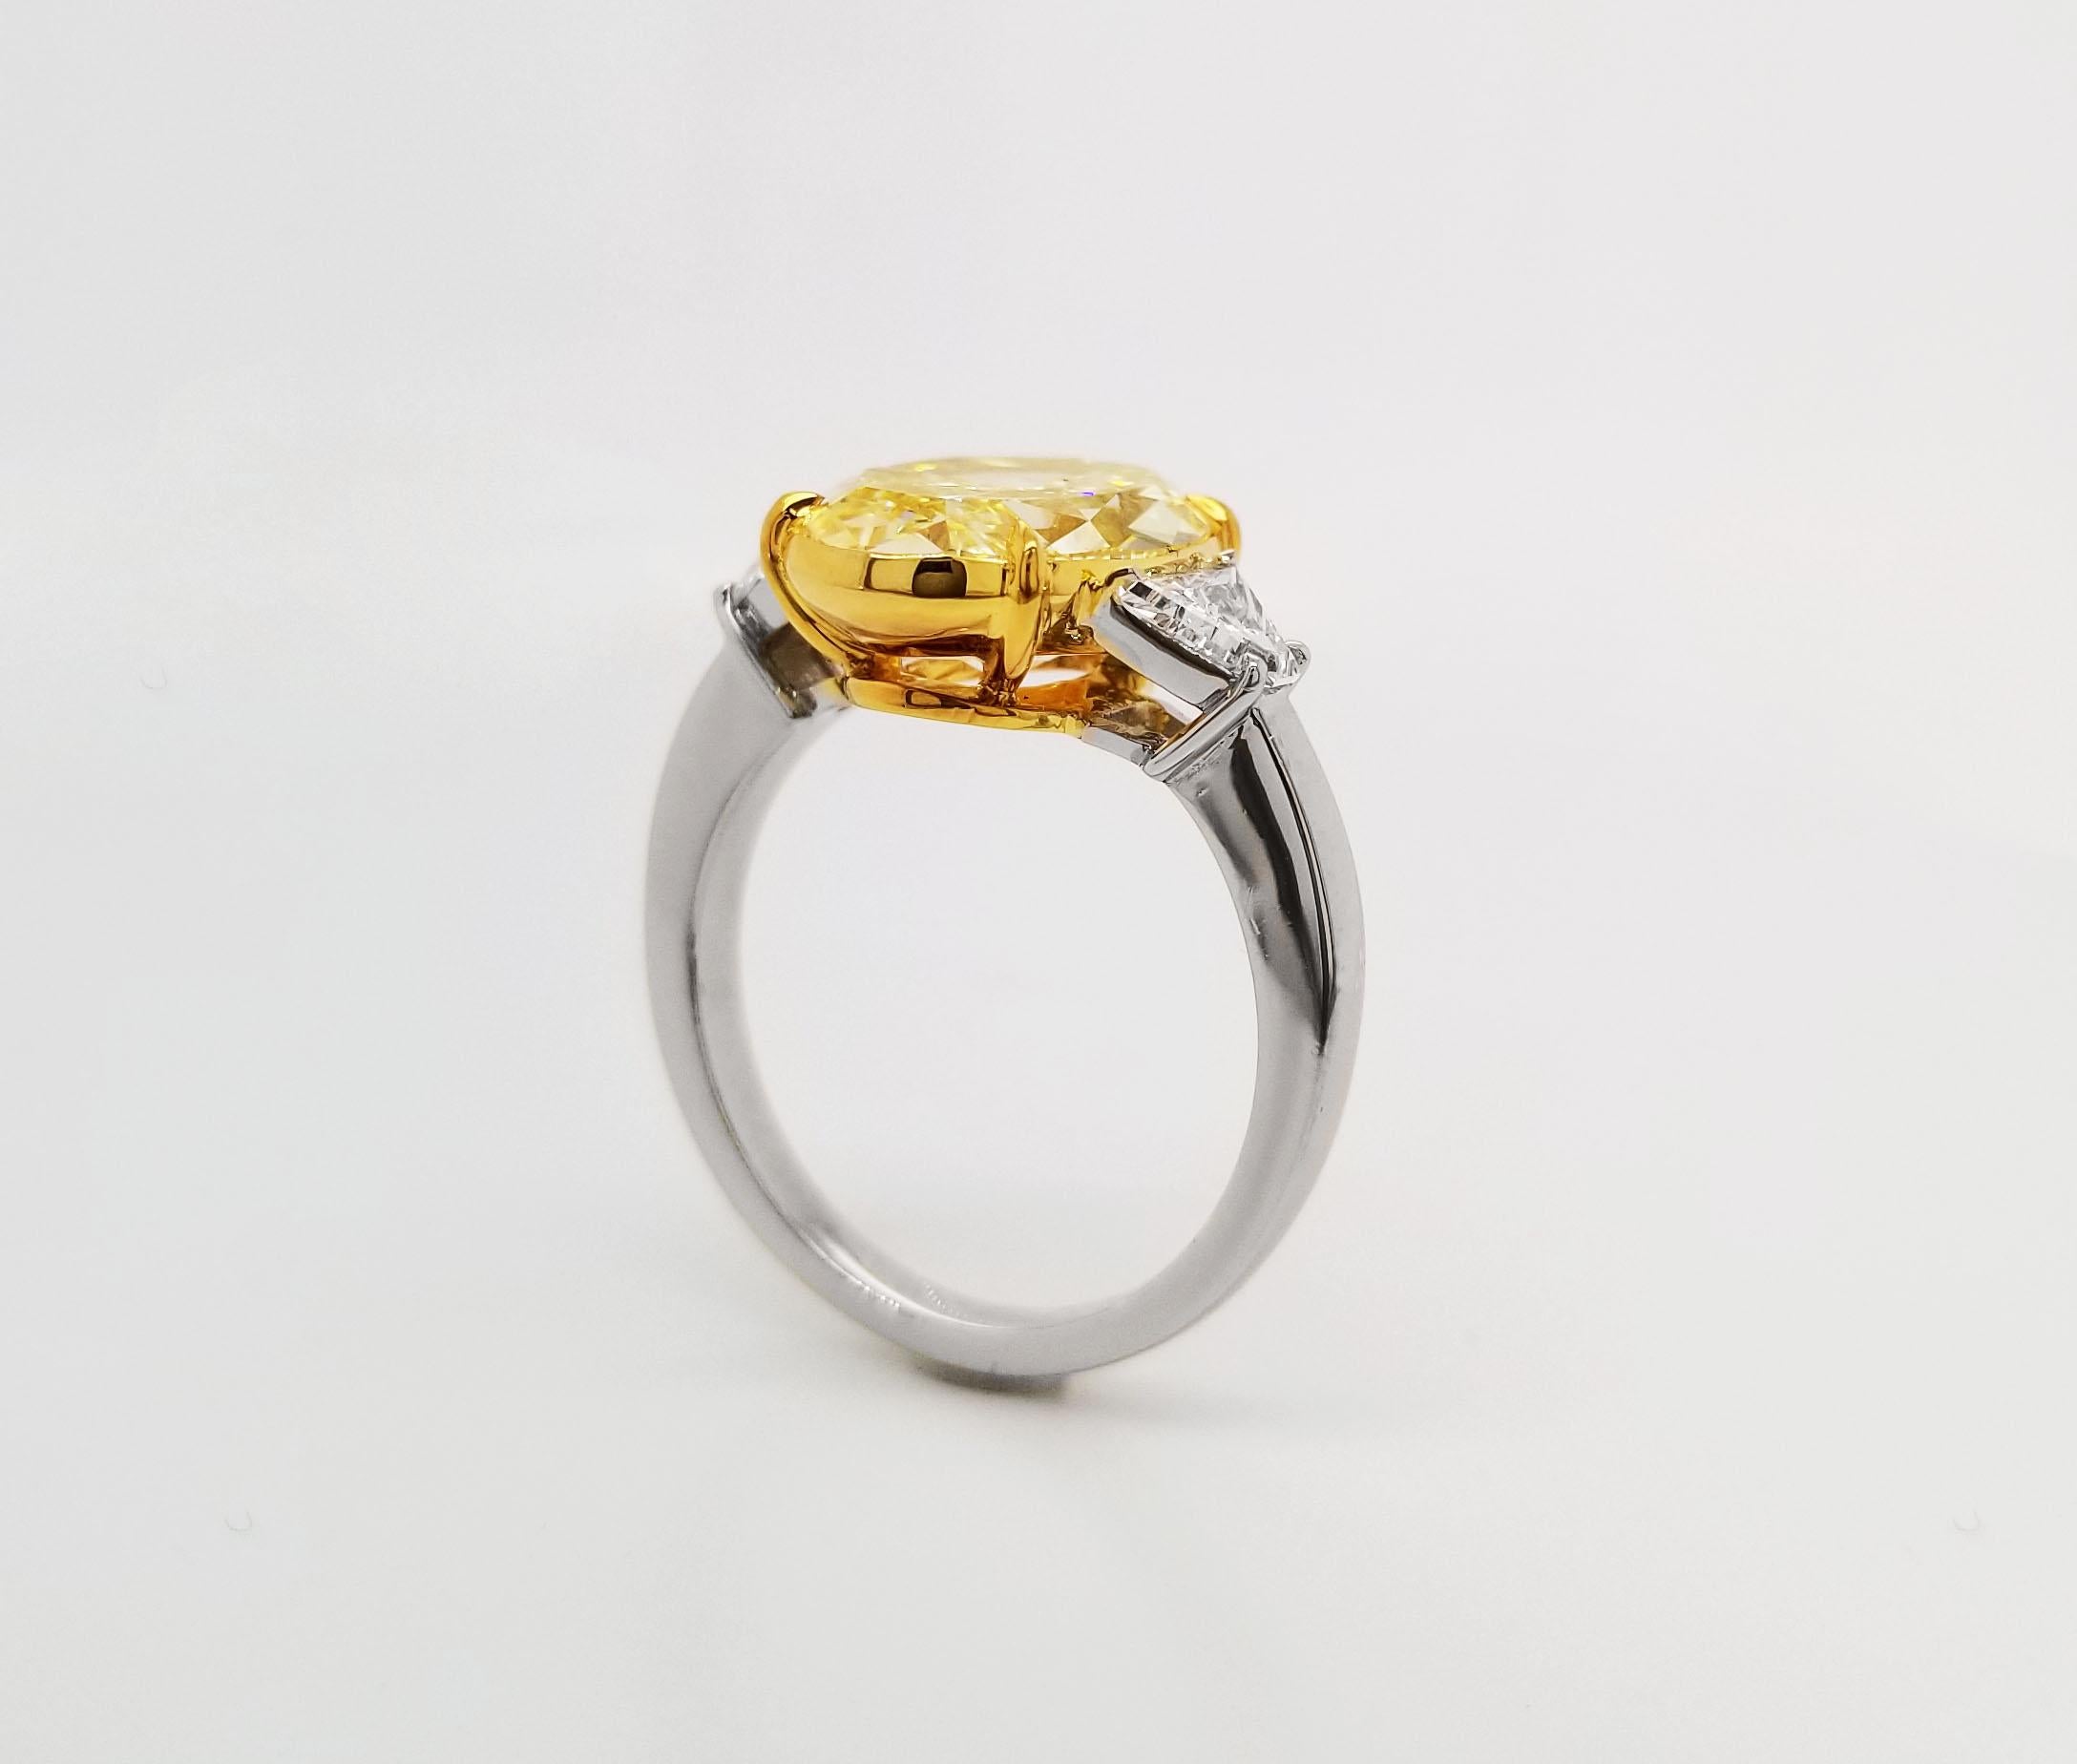 Contemporary Scarselli 5 Carat Fancy Yellow Diamond Ring in Platinum & 18k